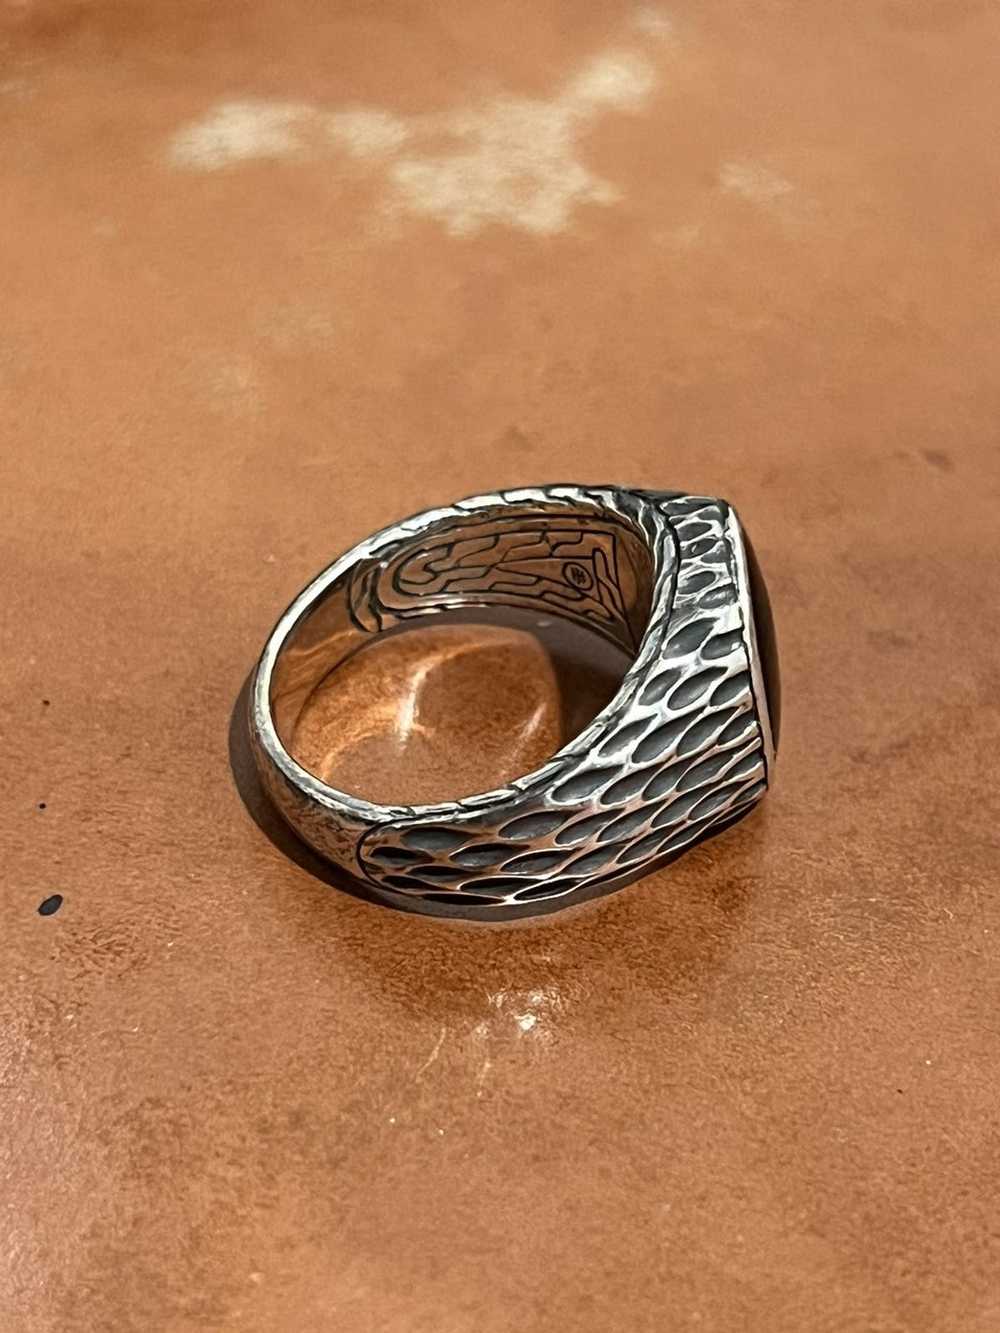 Designer John Hardy Legend Naga Ring - image 3